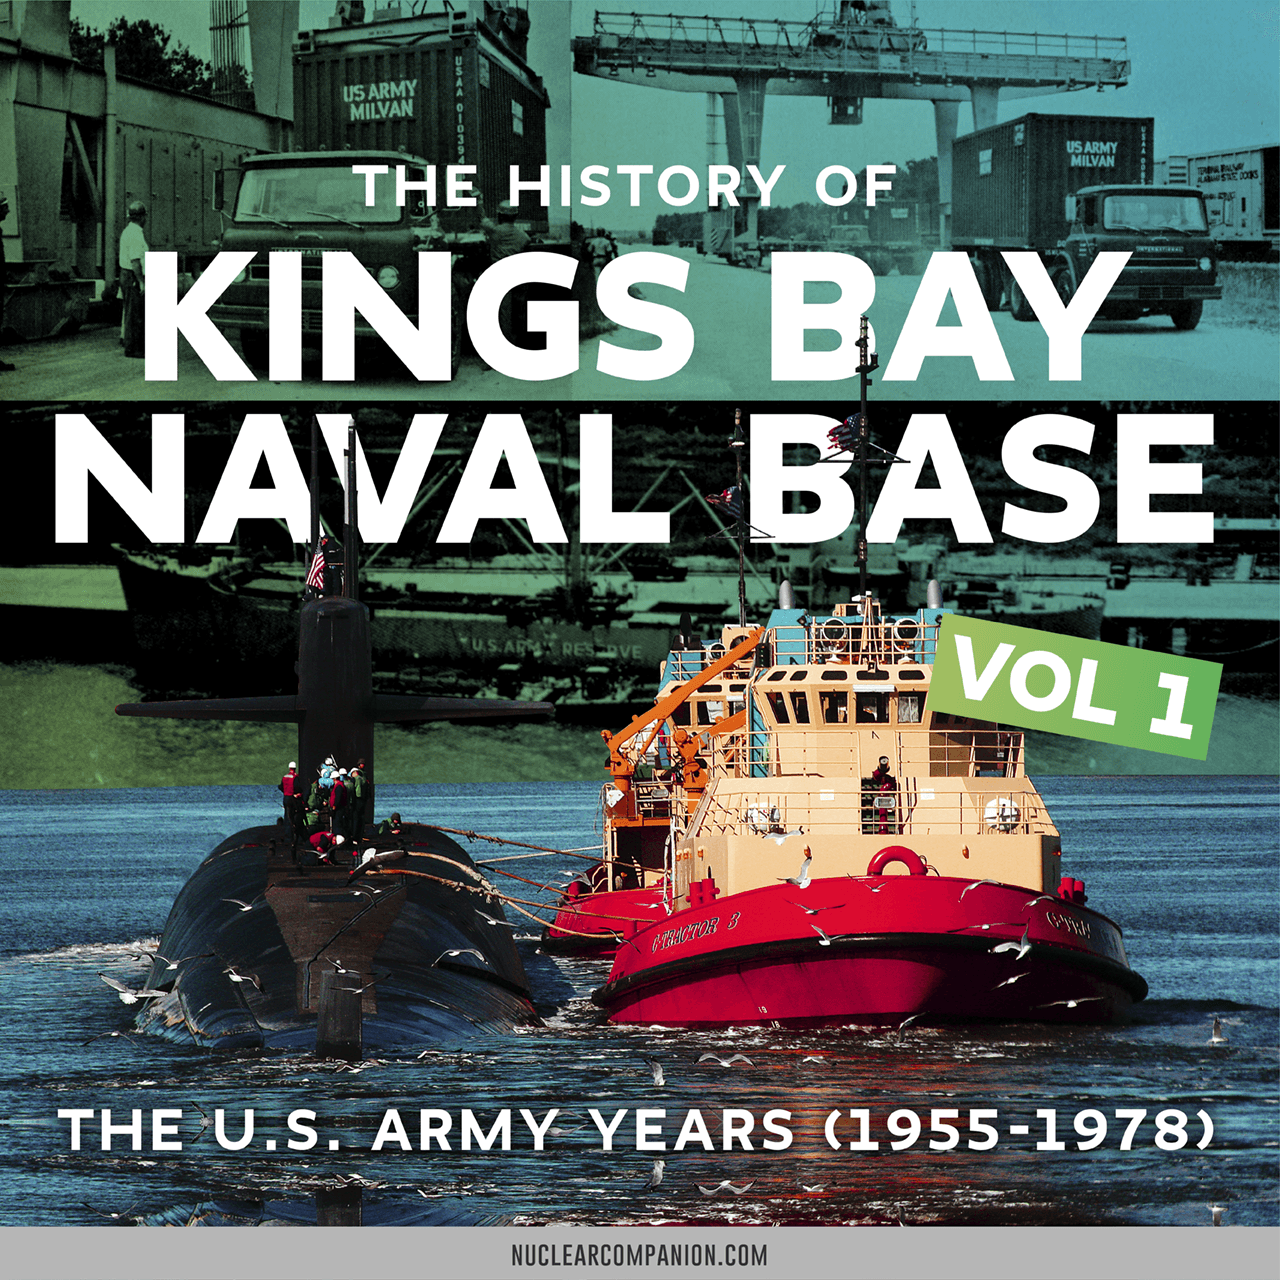 History of Kings Bay Naval Base Vol I: The U.S. Army years (1955